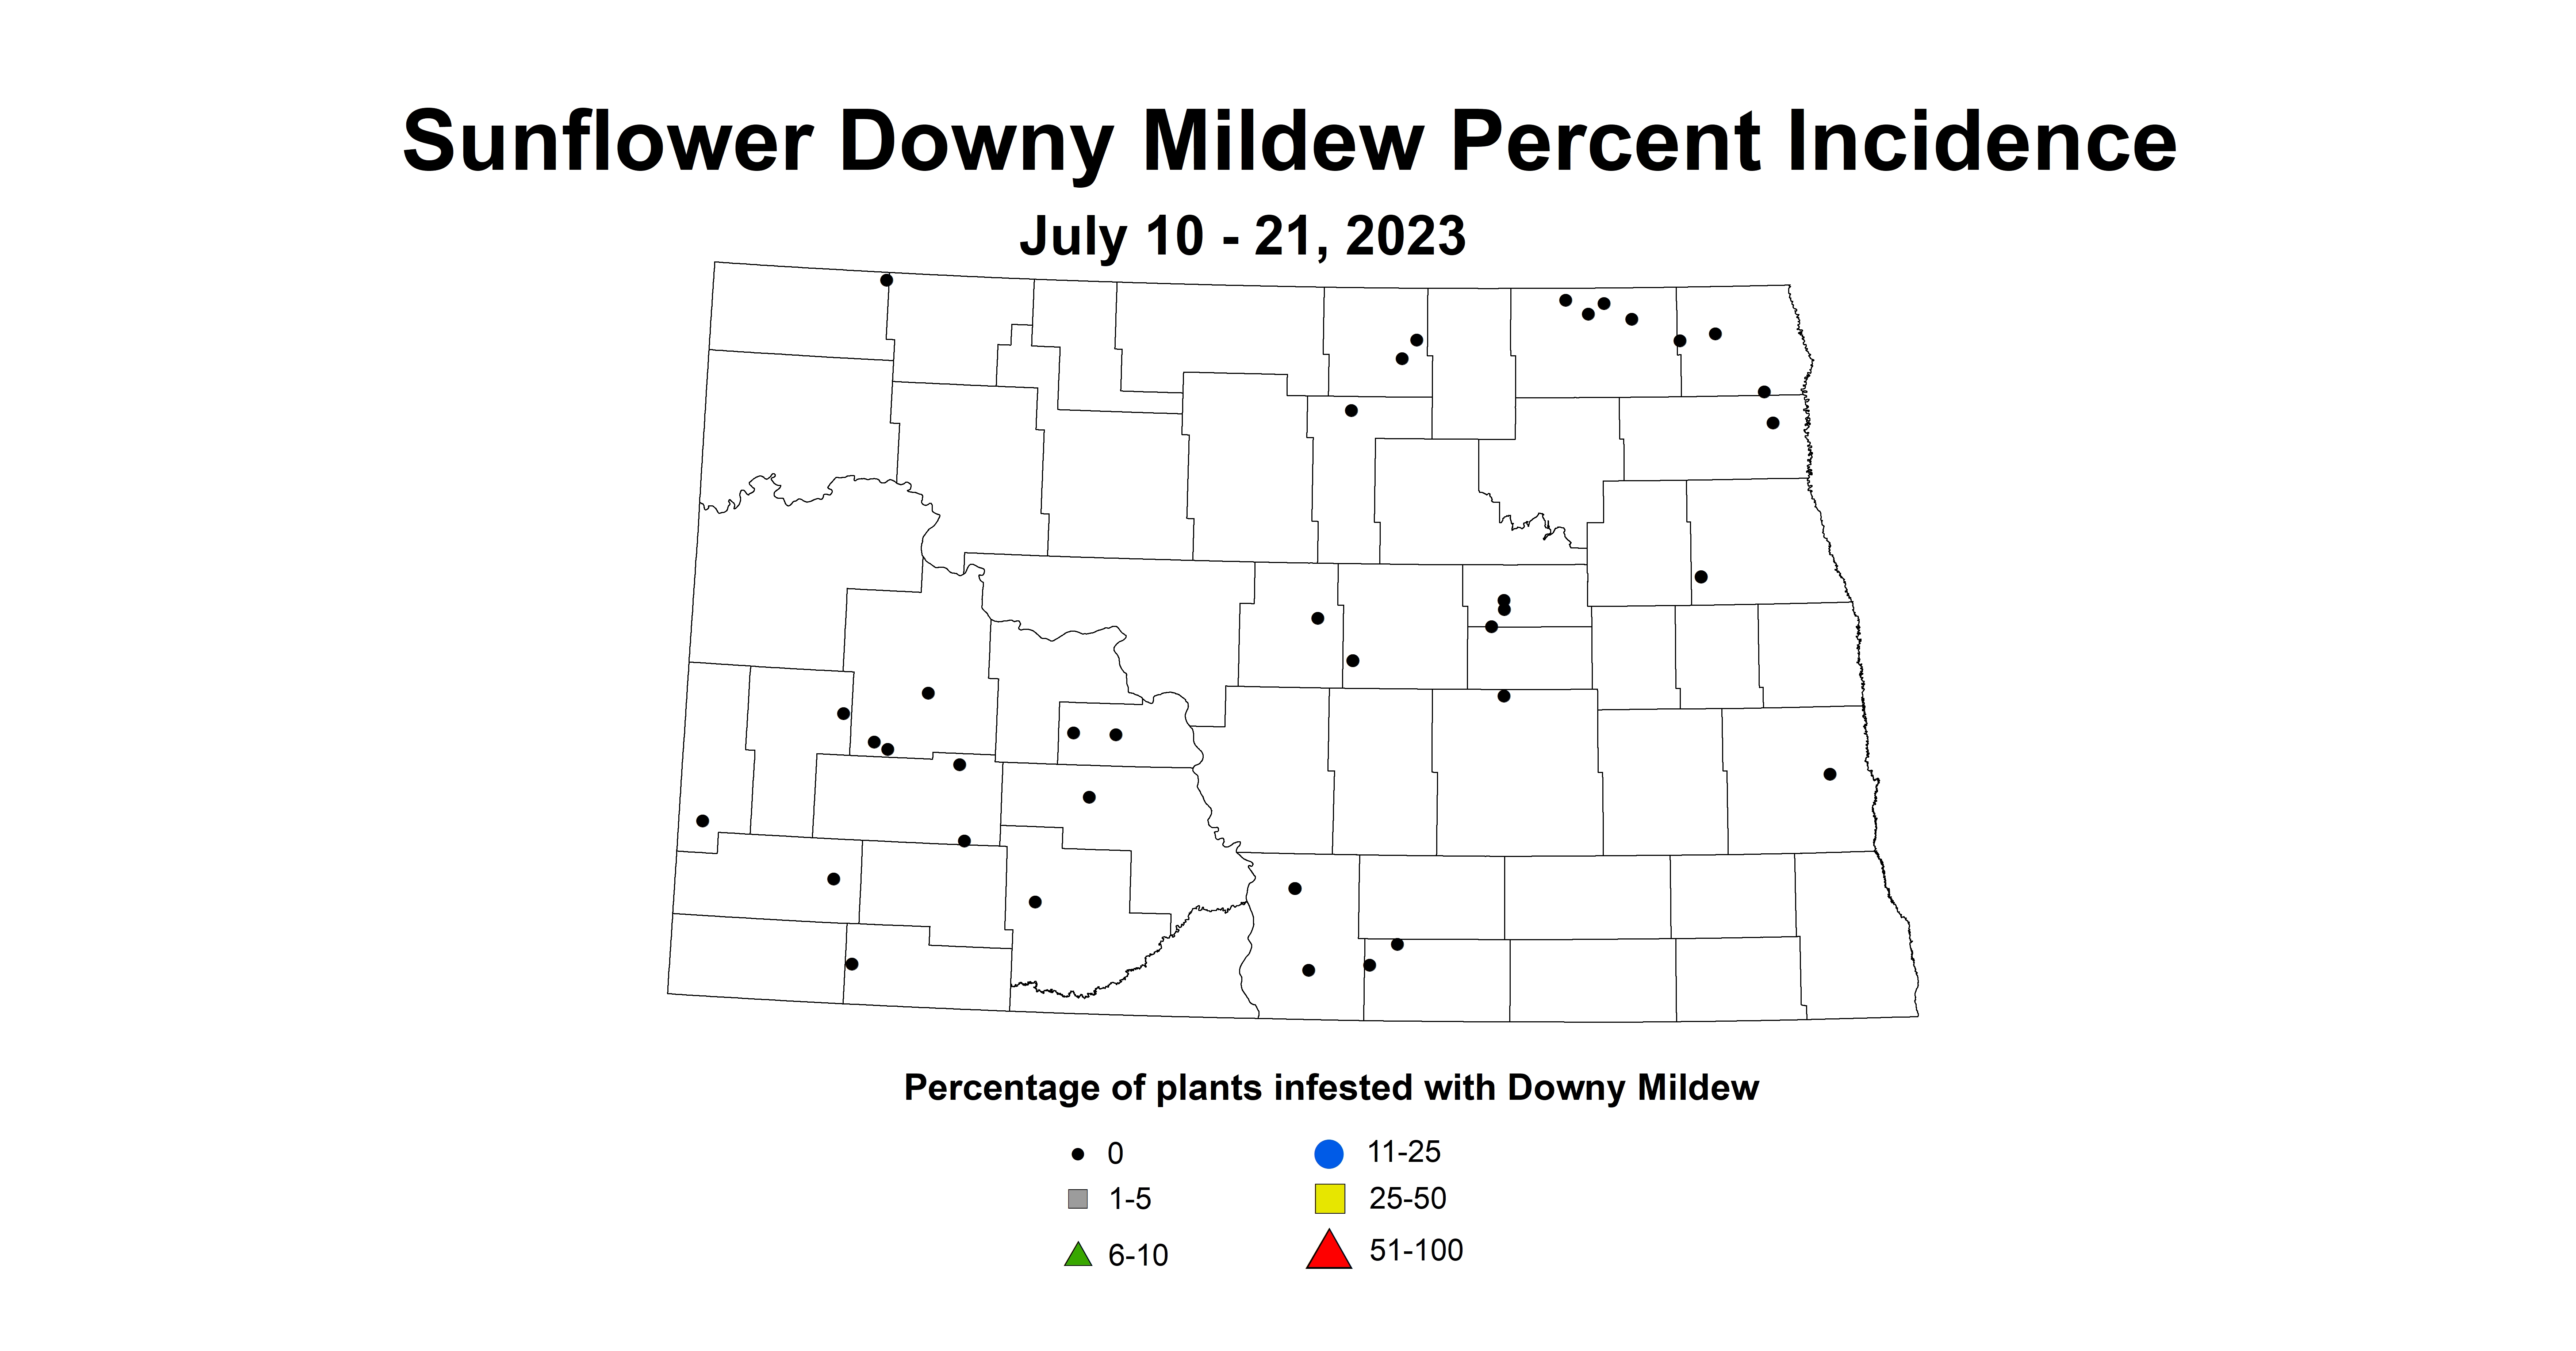 sunflower downy mildew incidence July 10-21 2023